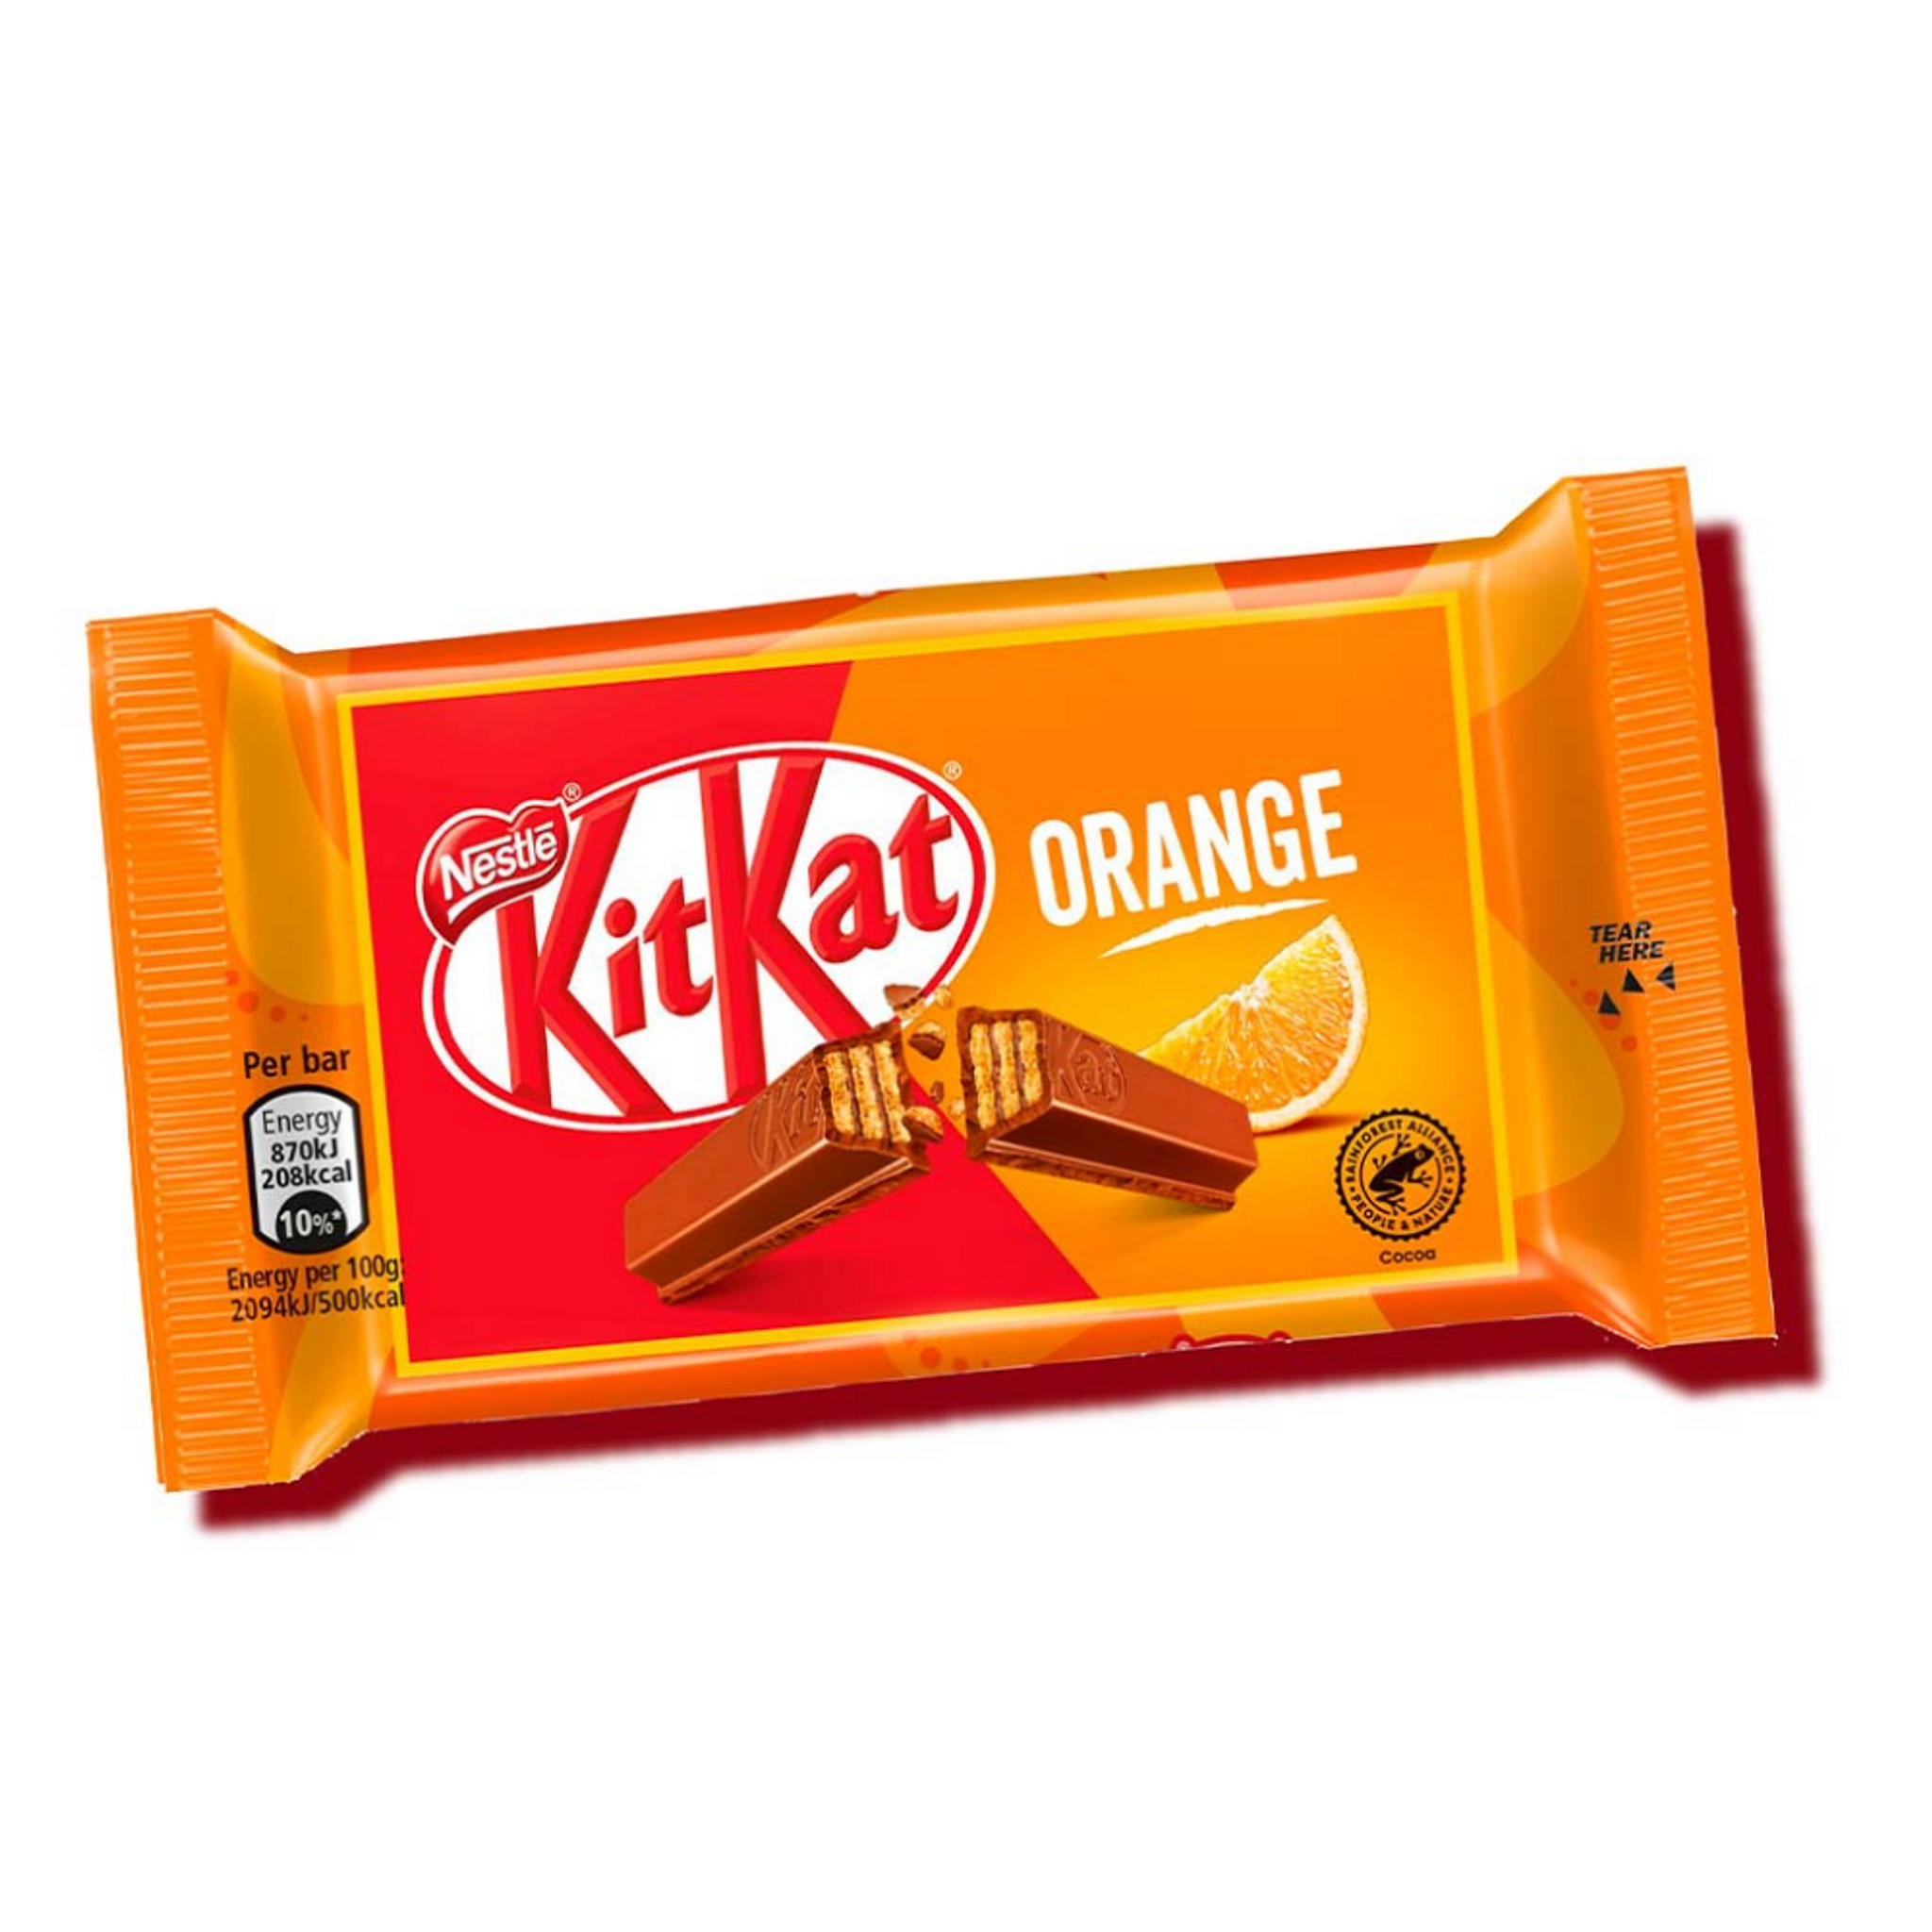 Kit Kat 4 Finger Orange 1x24